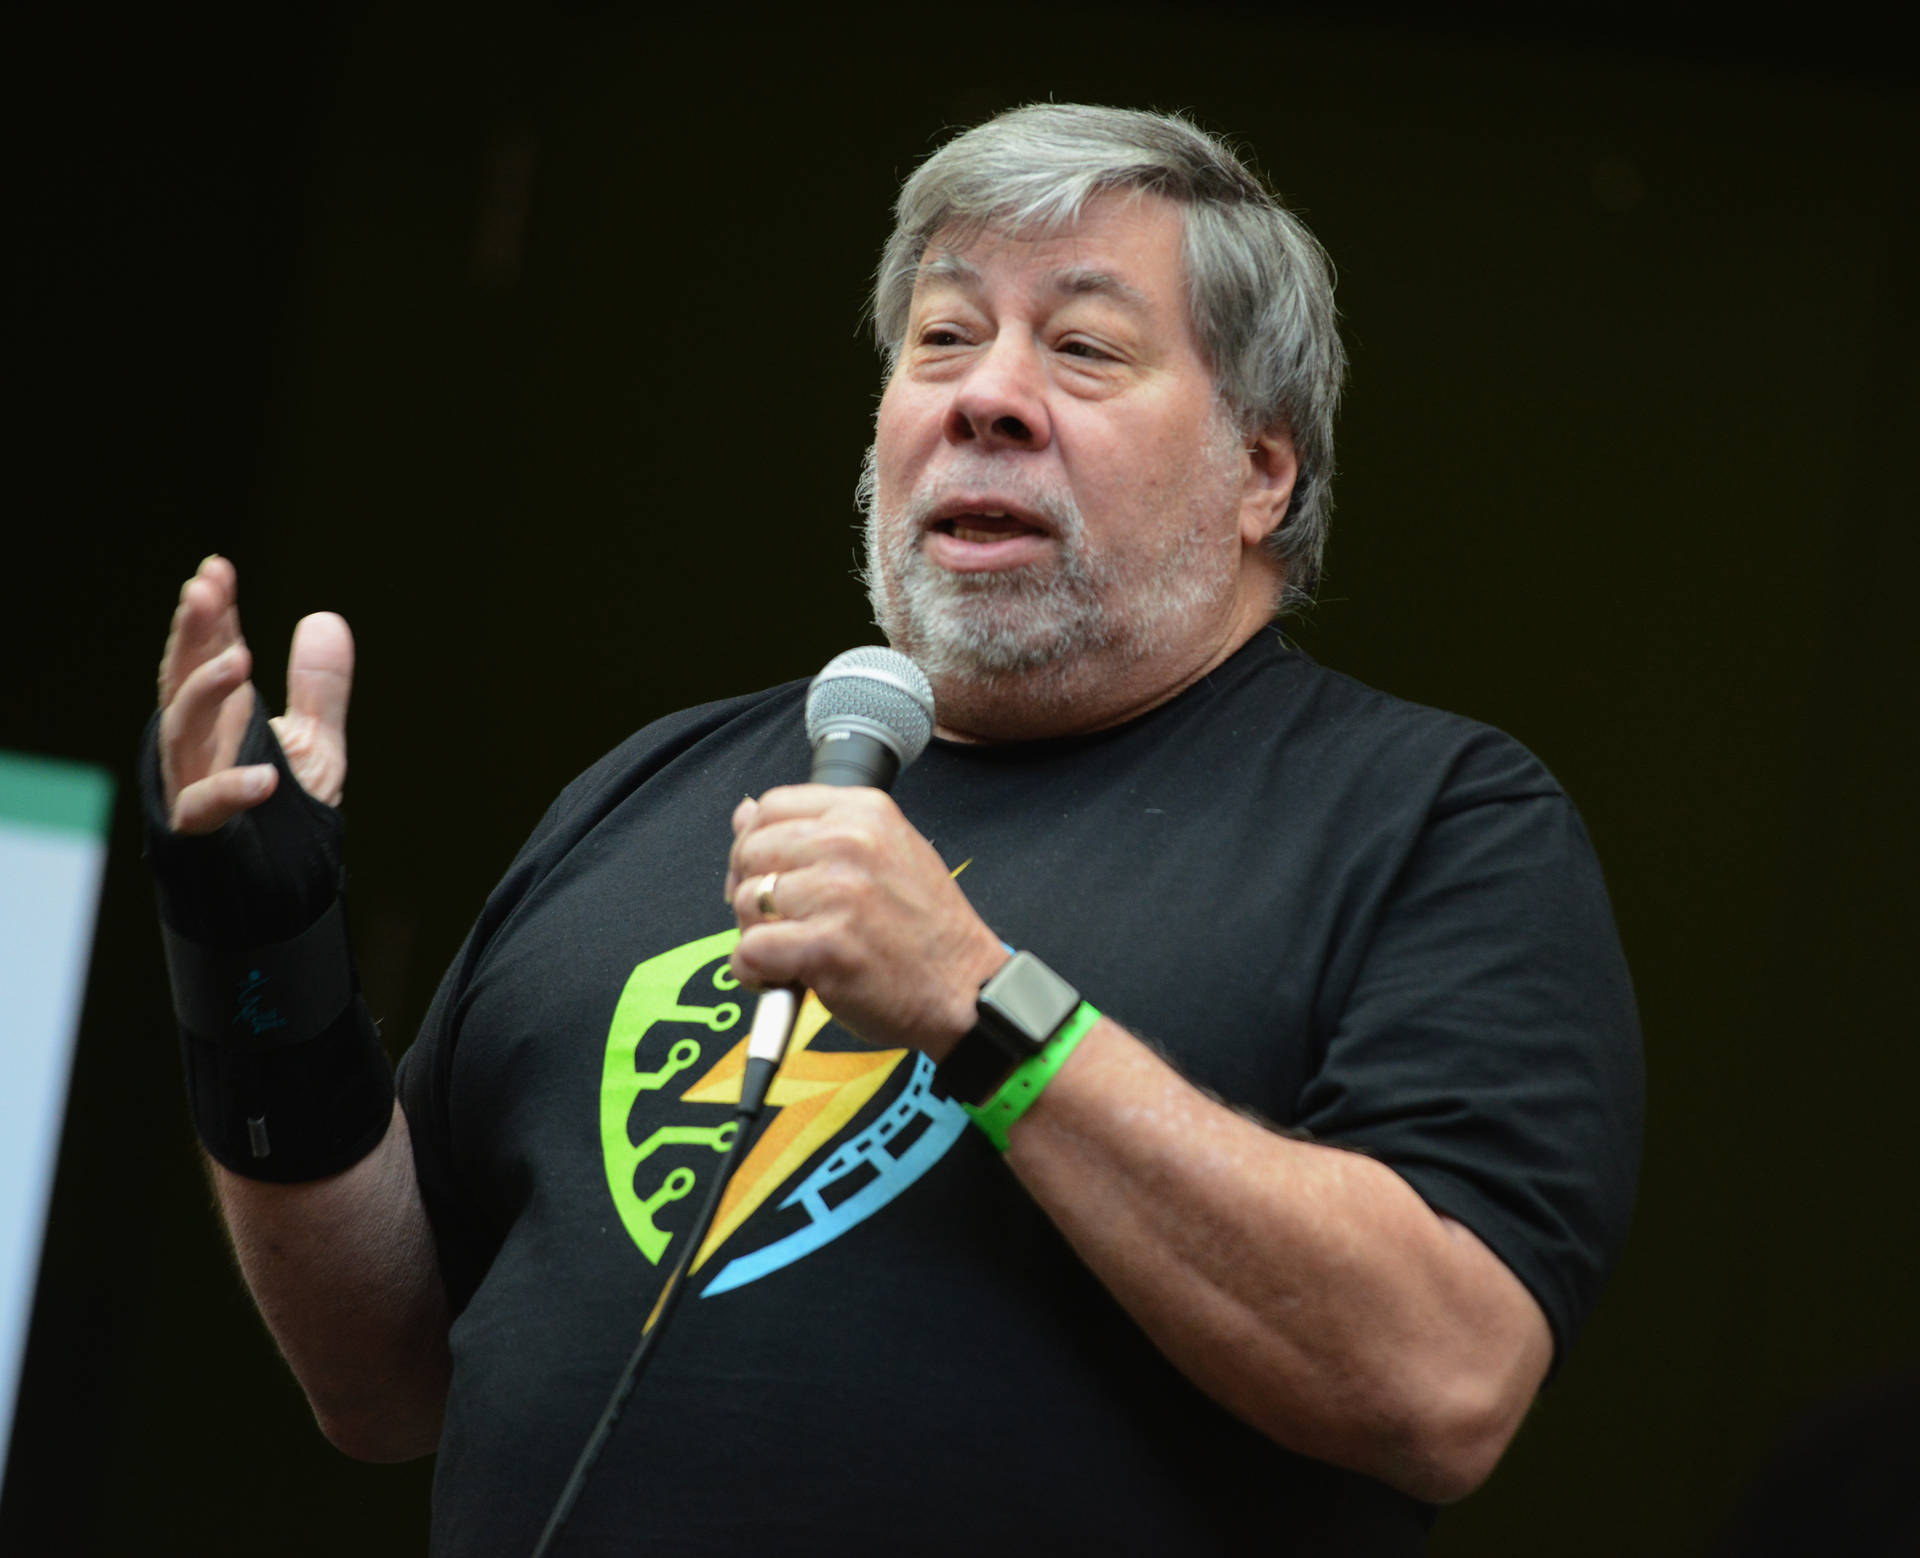 Steve Wozniak Speaking While Holding Microphone Wallpaper